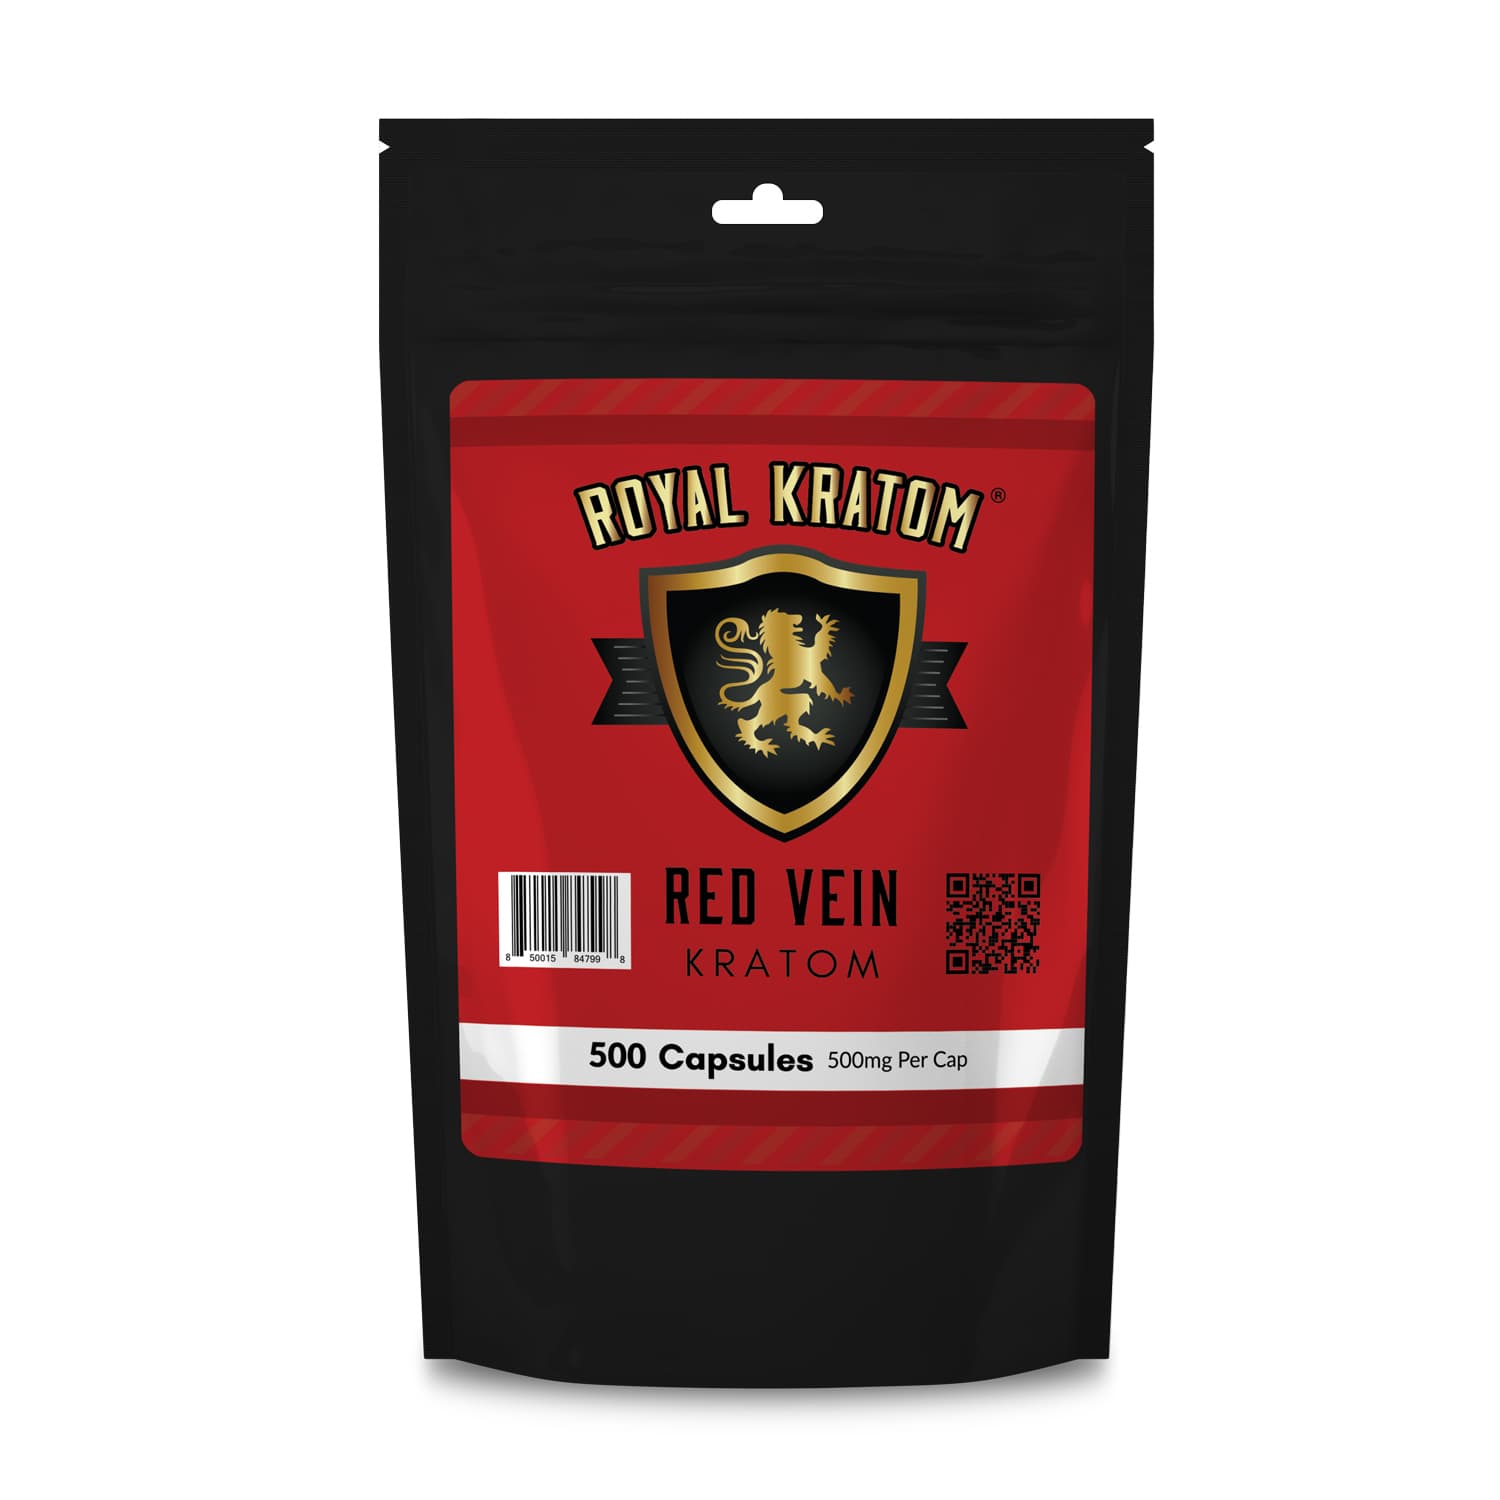 Royal Kratom Red Vein Kratom Capsules 500 Count front of package